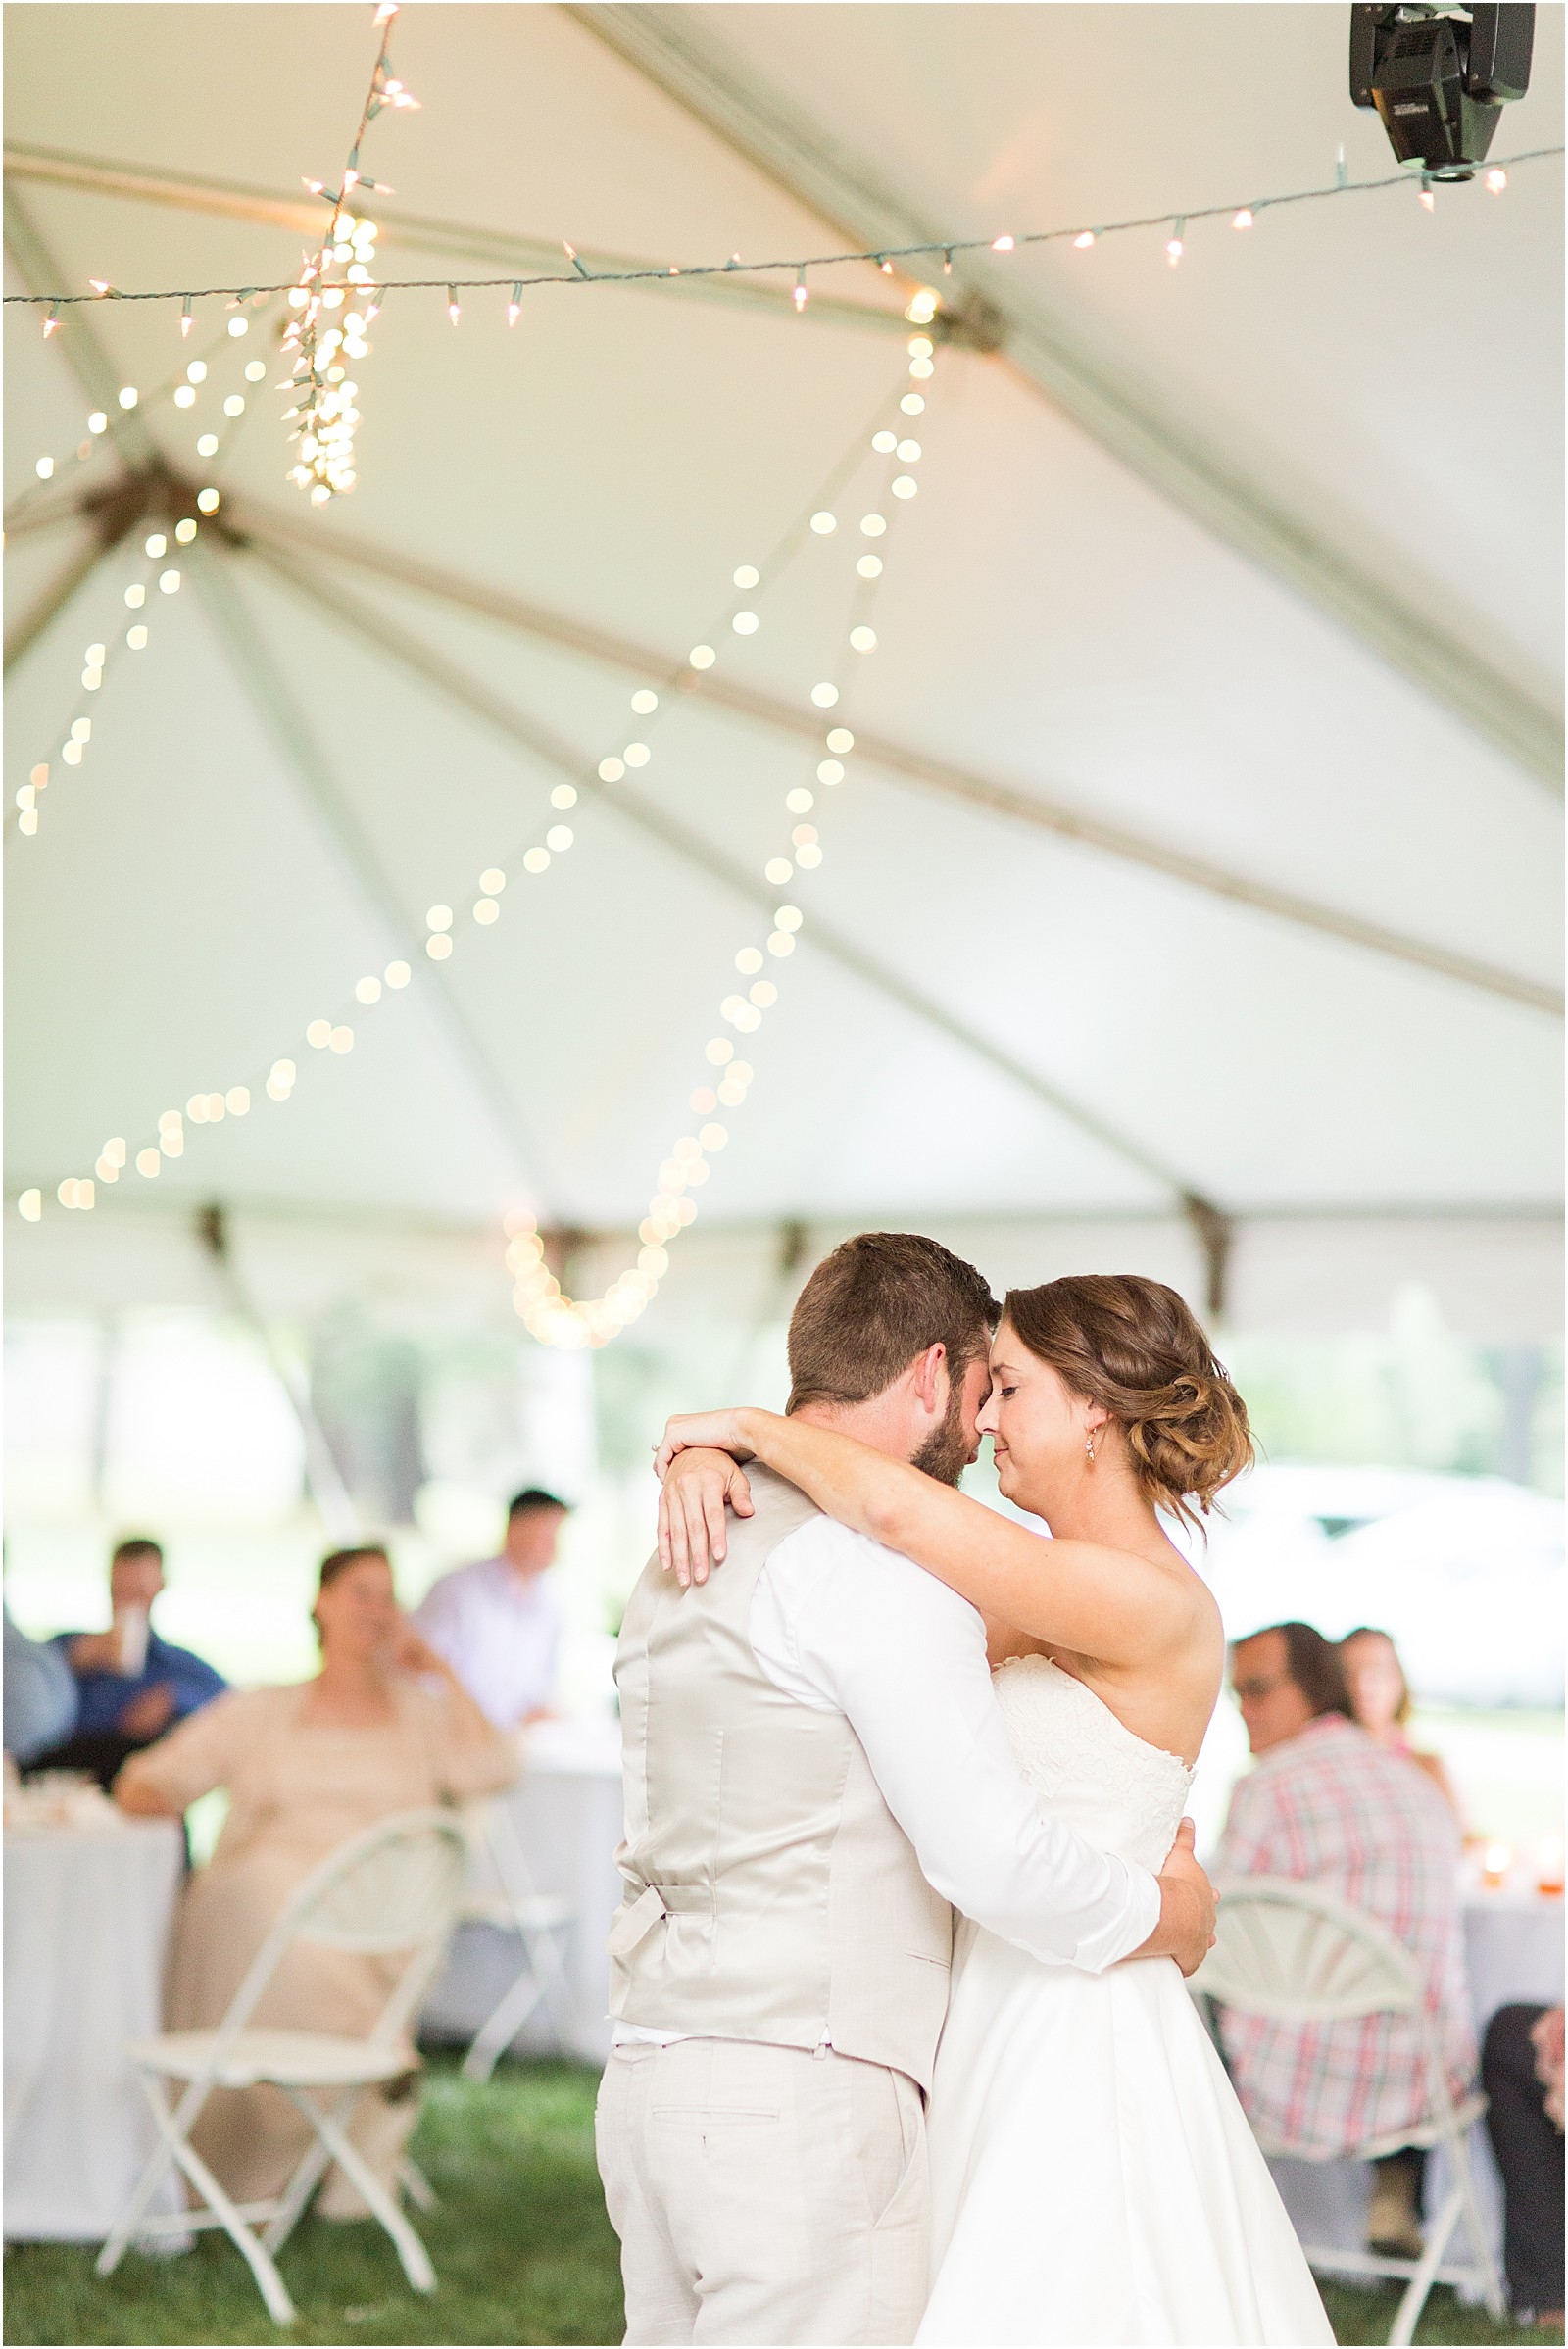 A Evansville Indiana Backyard Wedding | Bailey and Ben 087.jpg